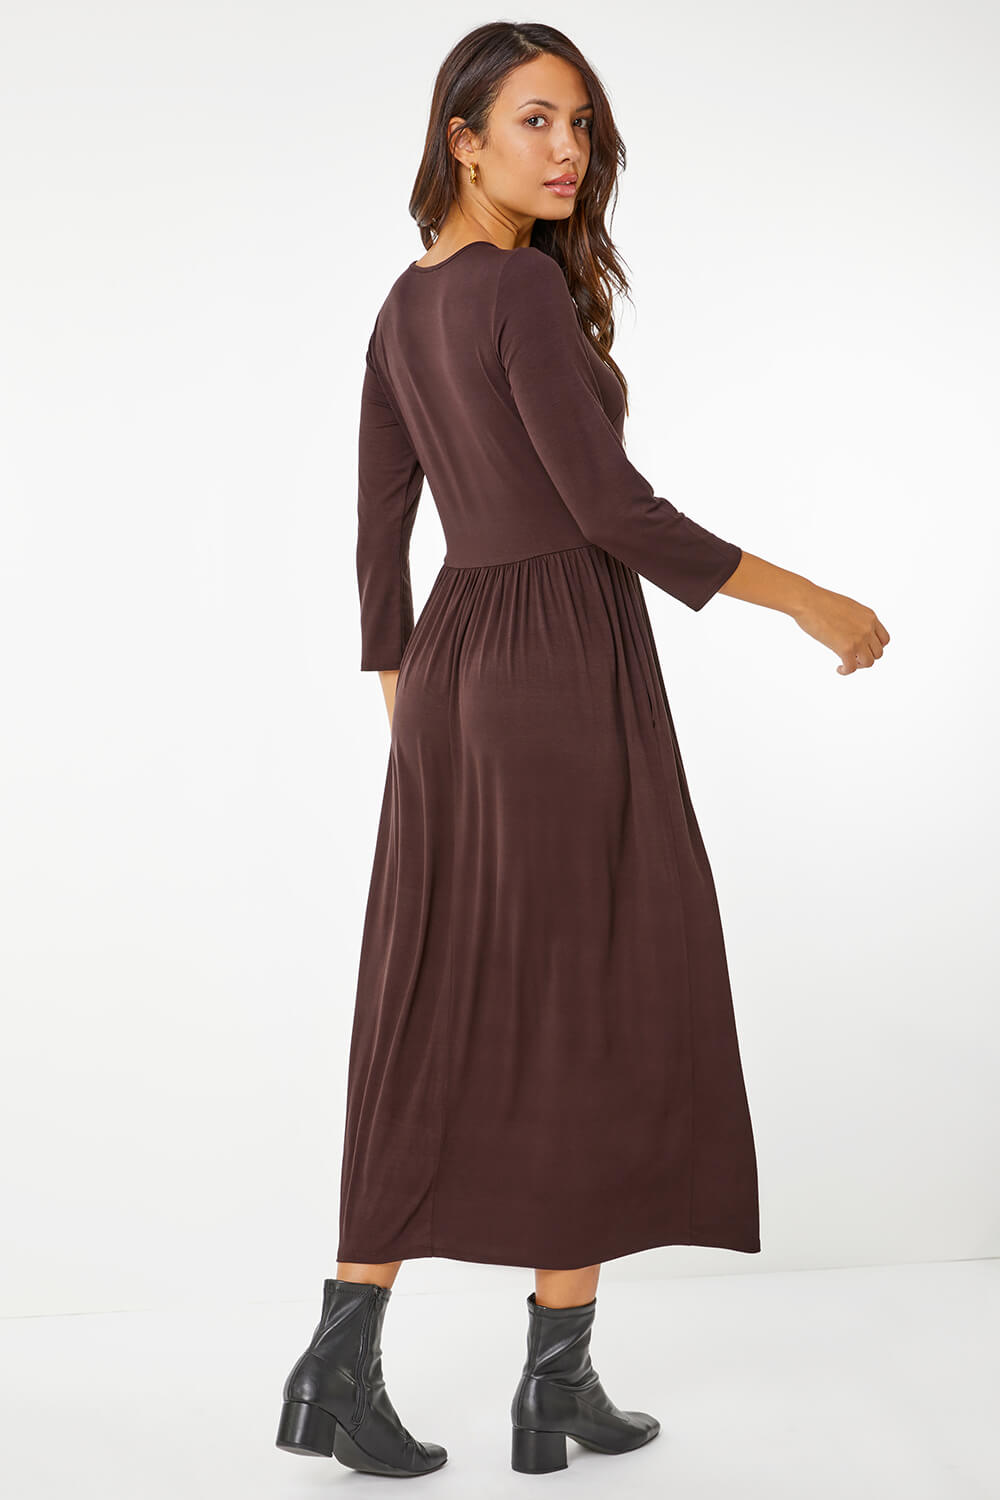 Chocolate Stretch Jersey Pocket Midi Dress, Image 2 of 5